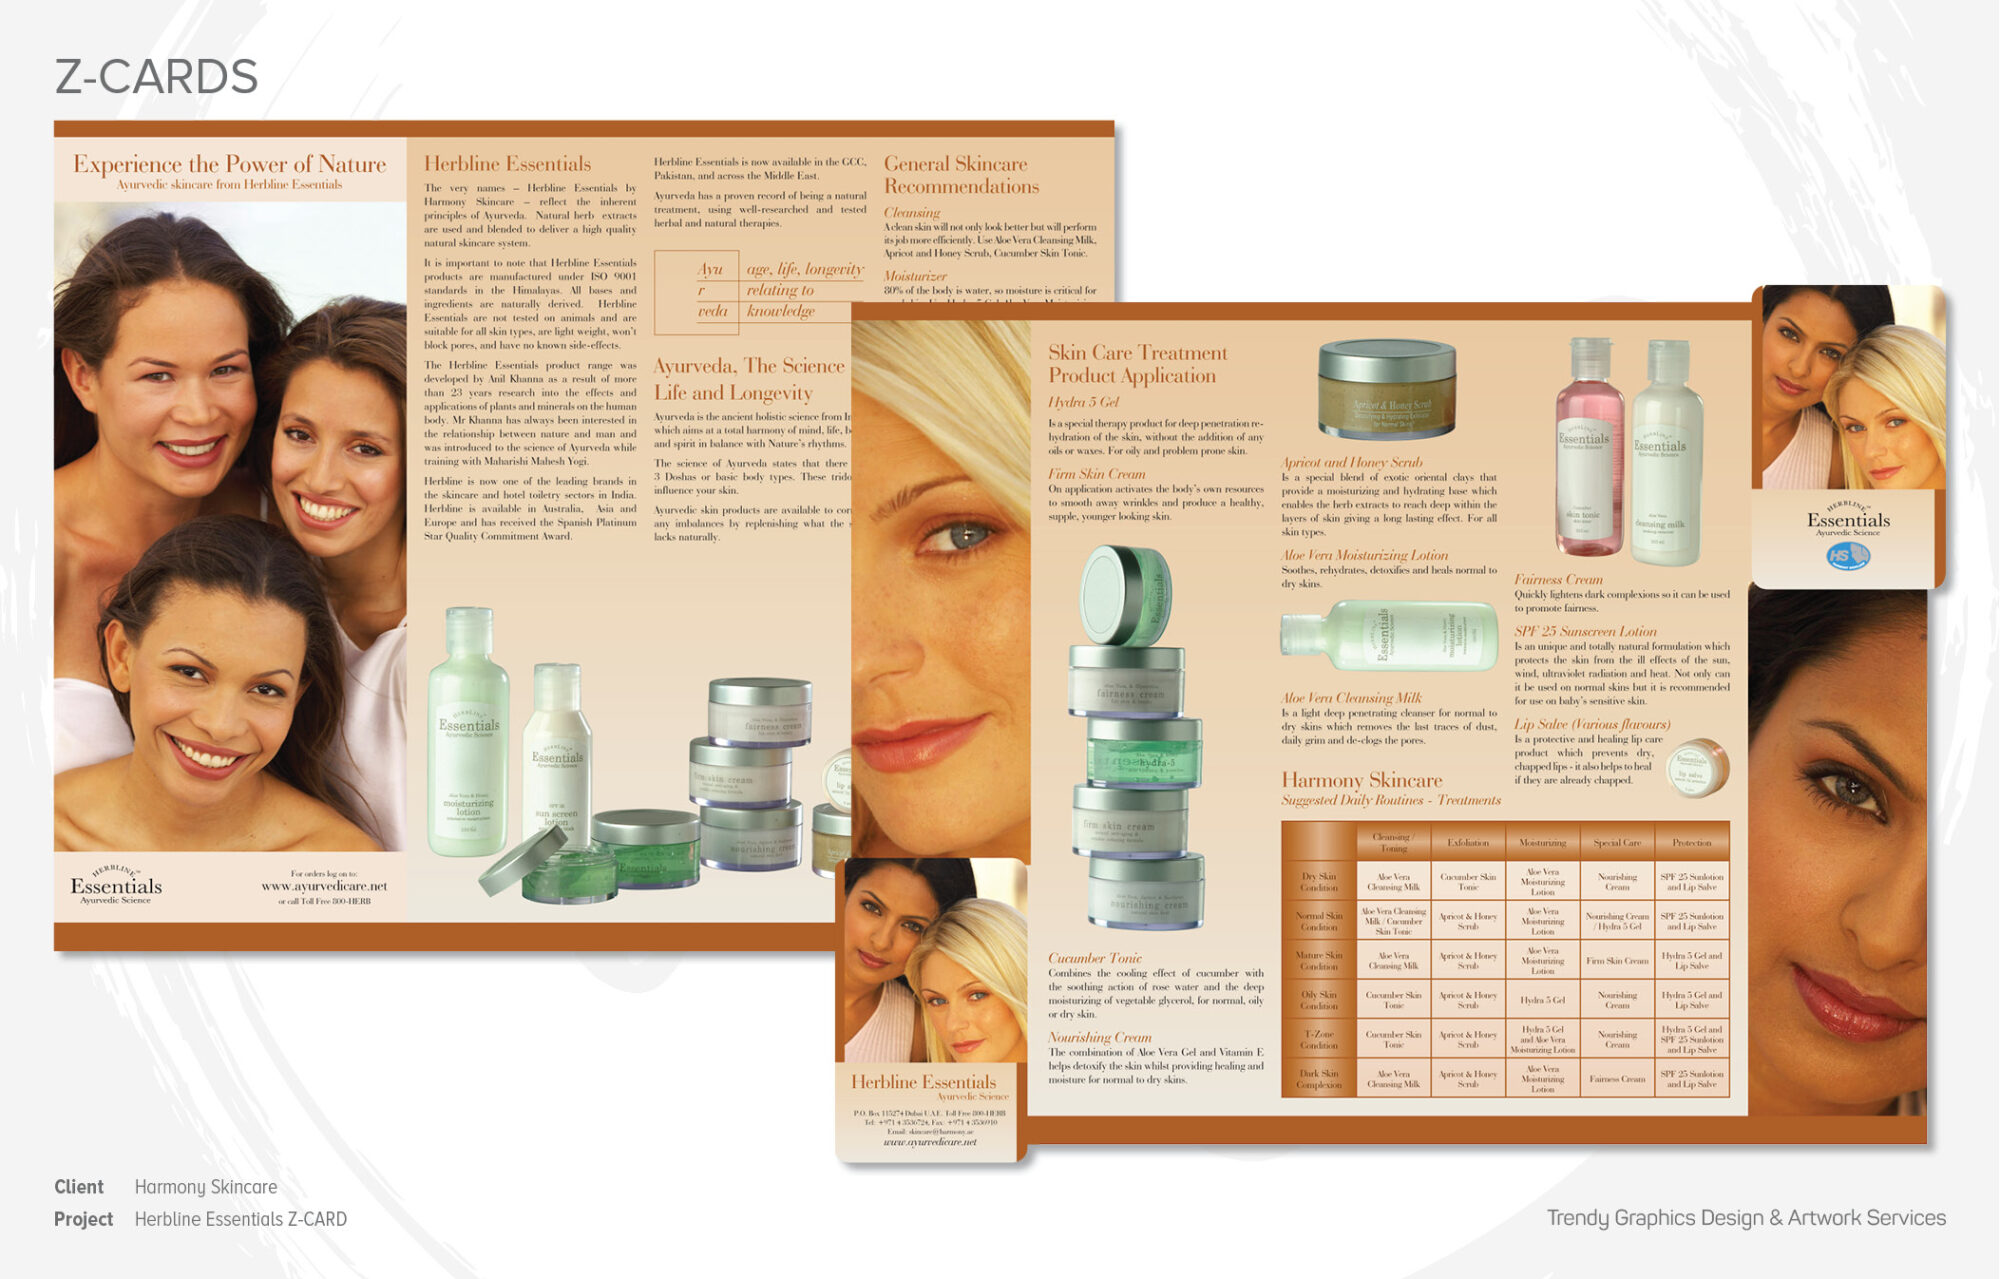 Harmony Skincare – Herbline Essentials Z-CARD